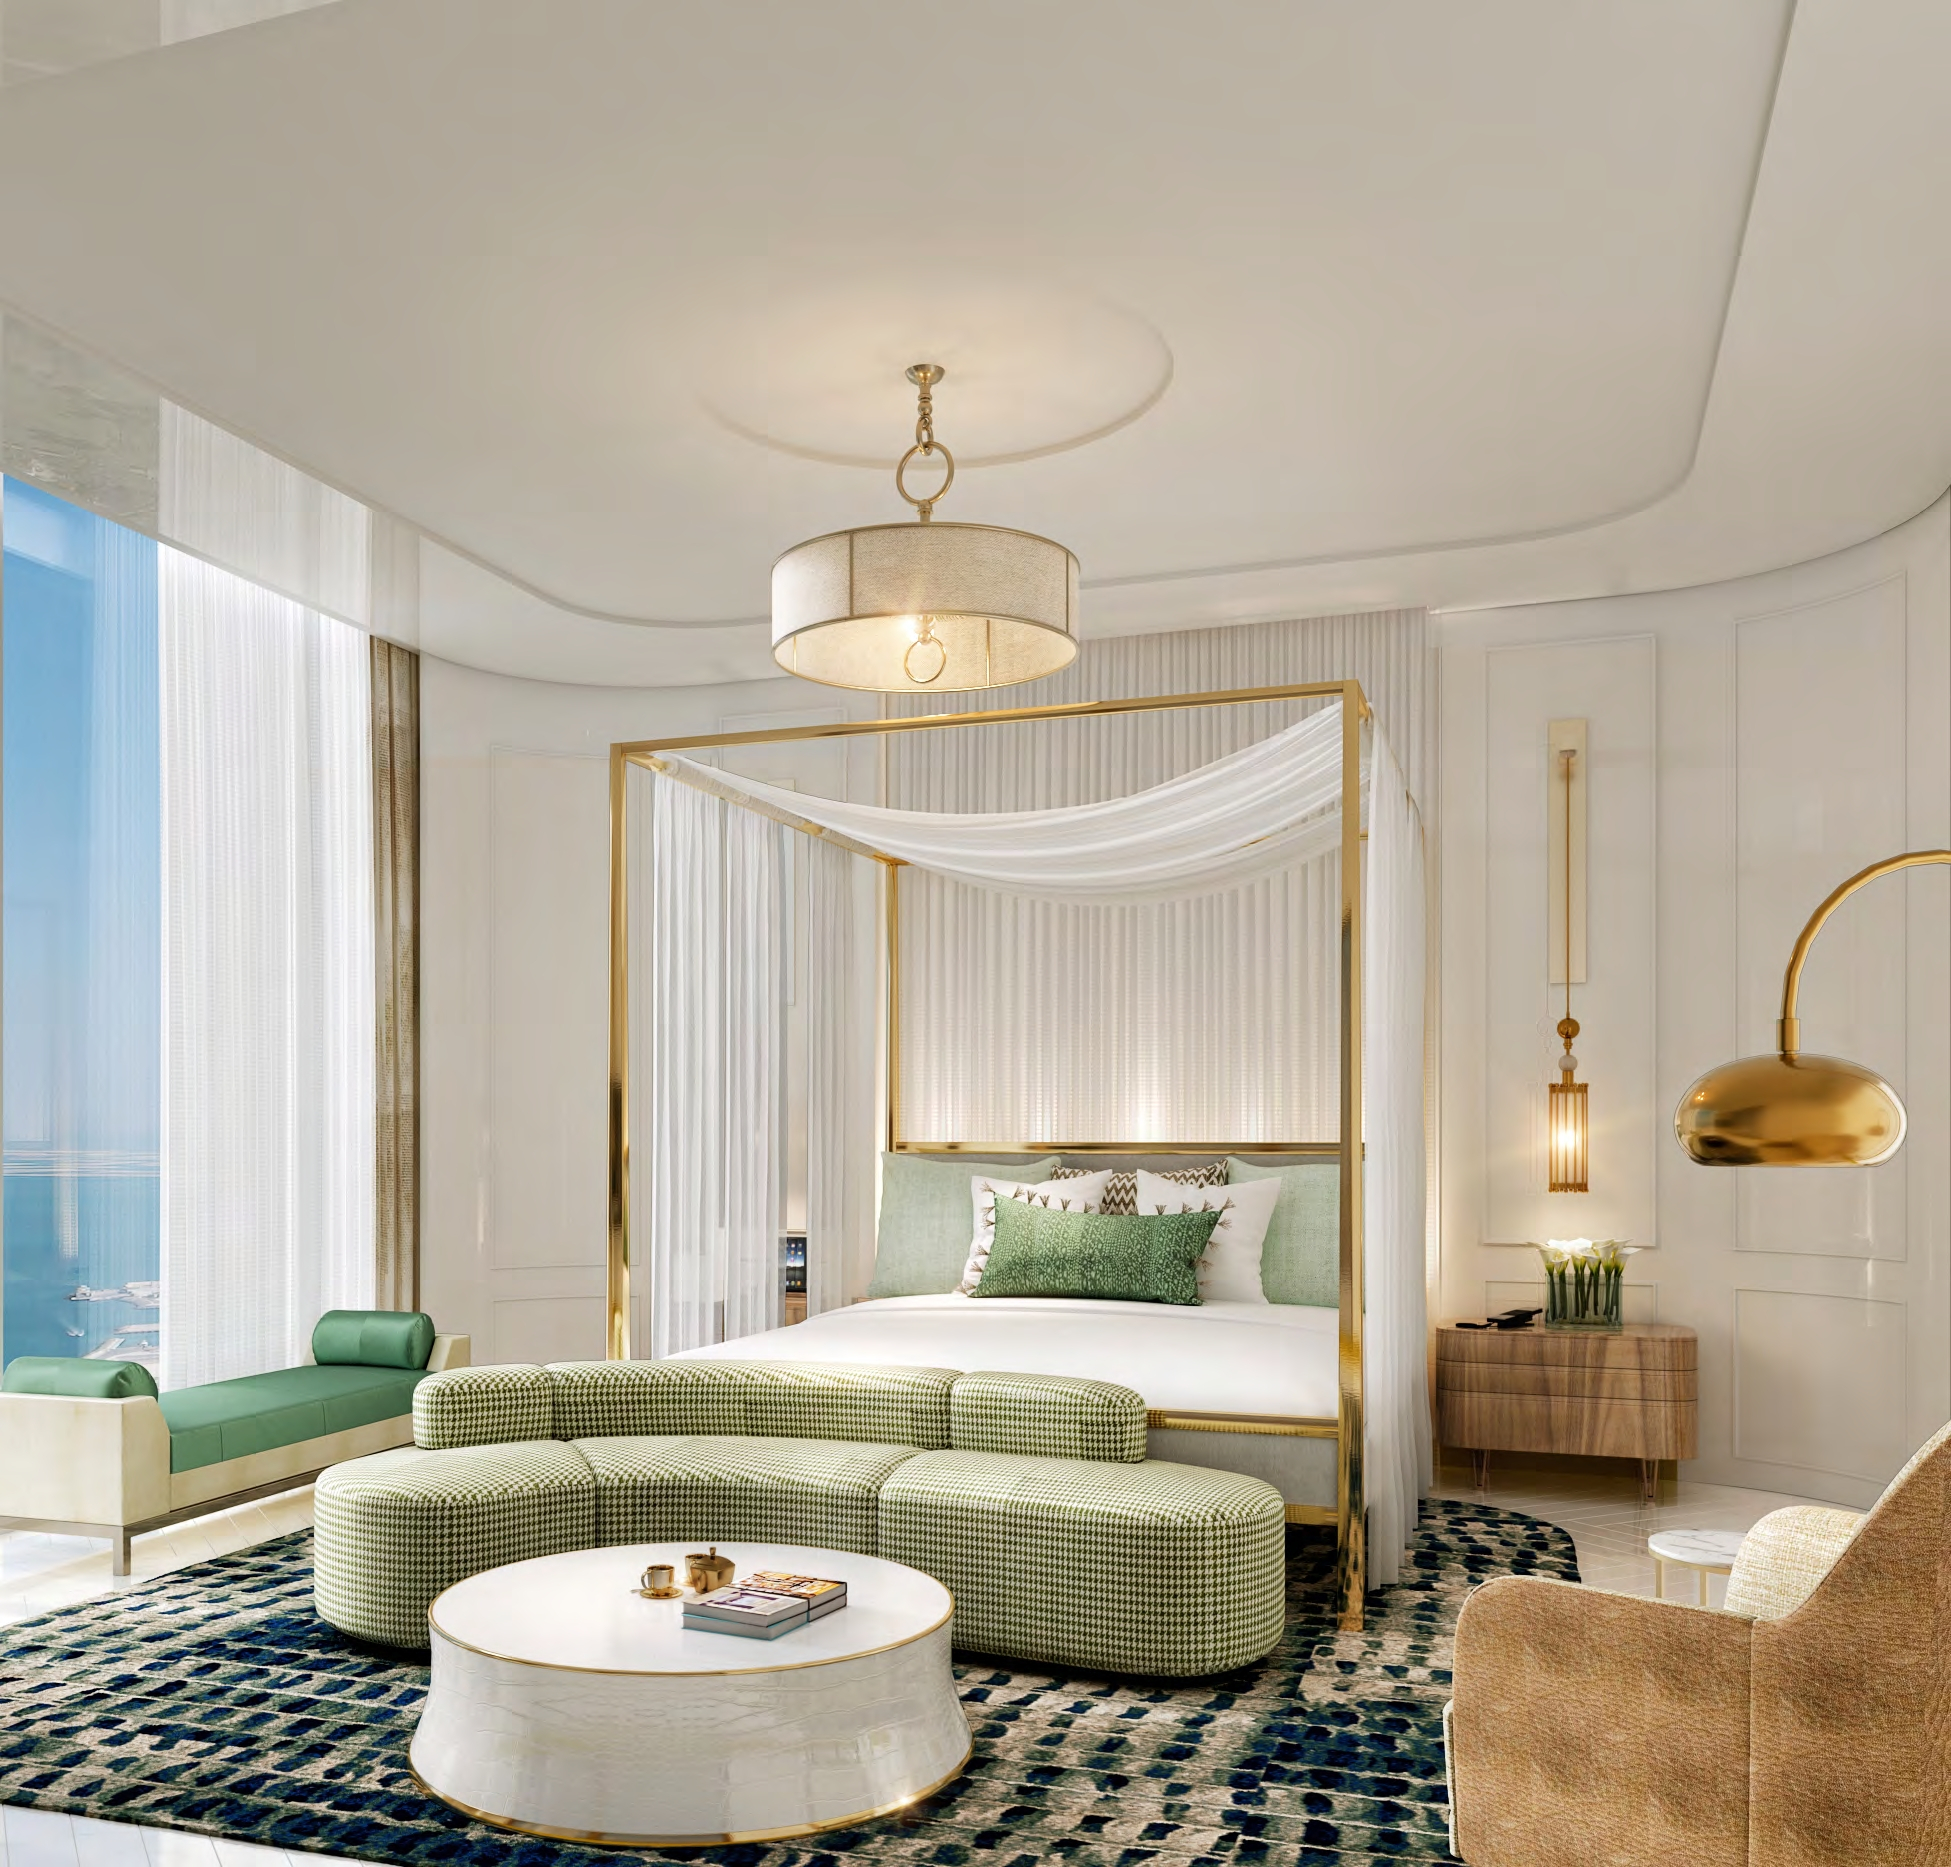 Luxury One-Bedroom Apartment in Dubai Slide Image 13